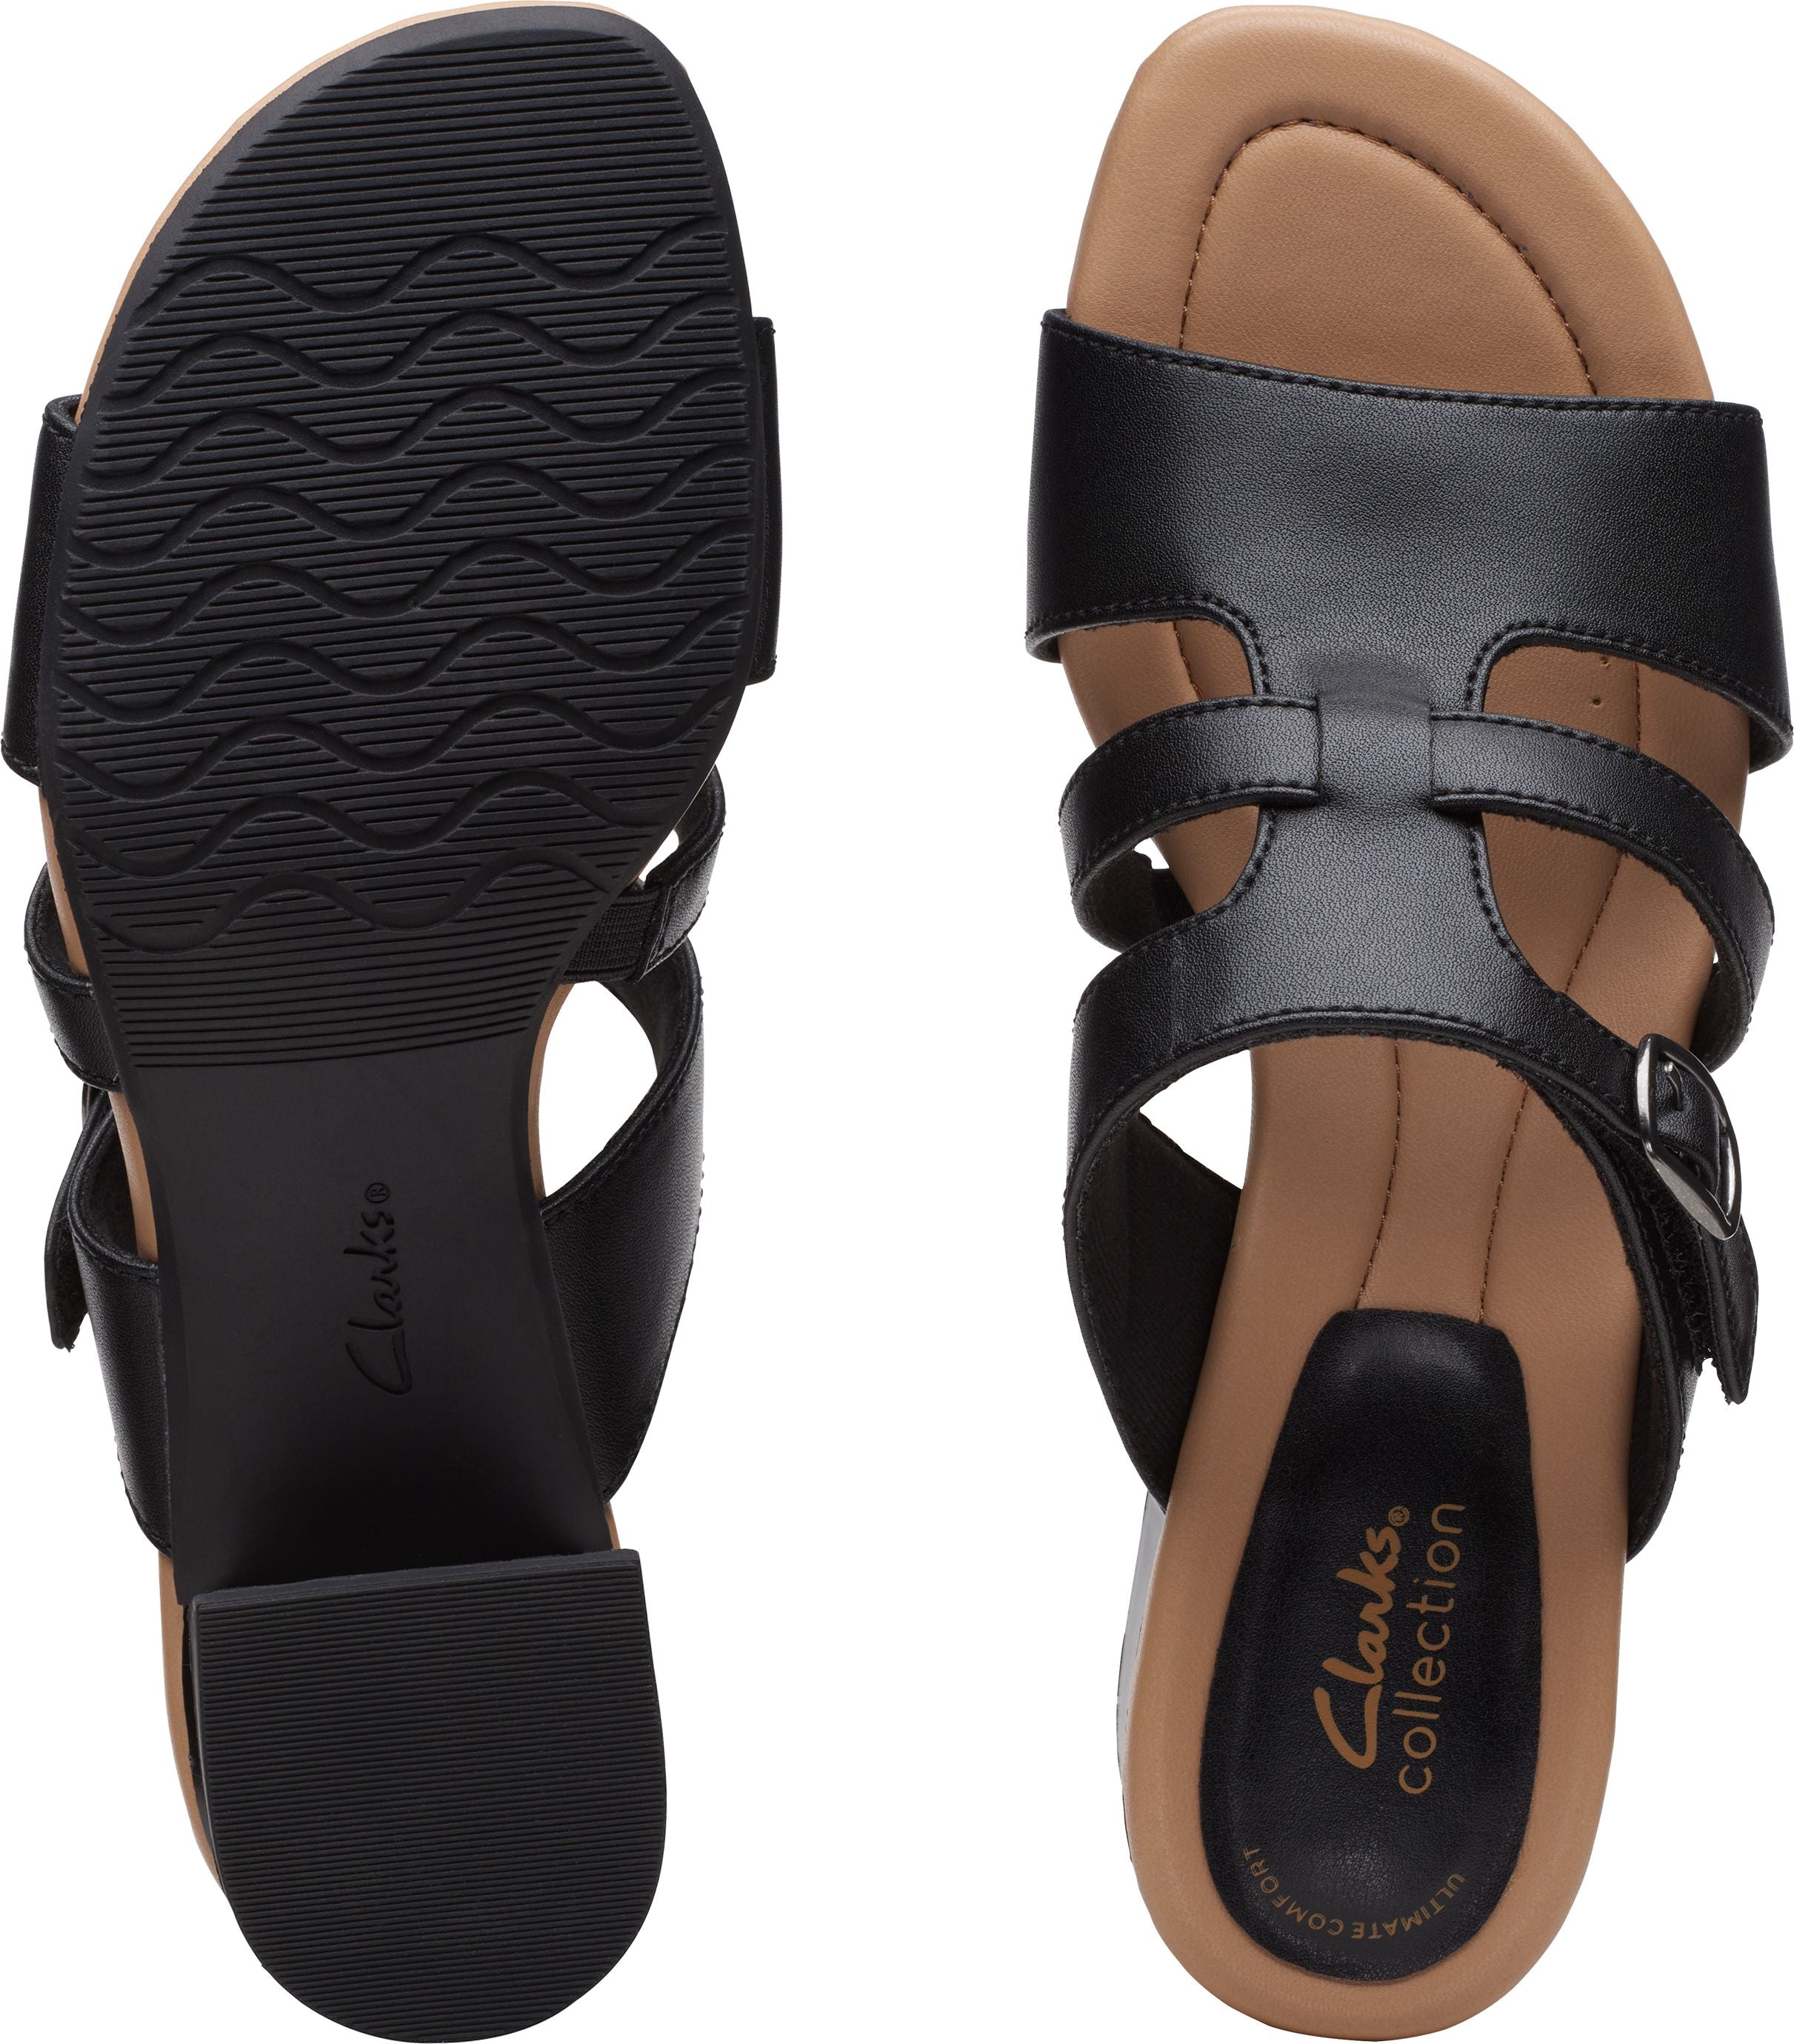 CLARKS SANDALS | WOMAN TRIGENIC SIZE 8.5 COLOR BROWN | Clarks sandals, Womens  sandals, Clarks